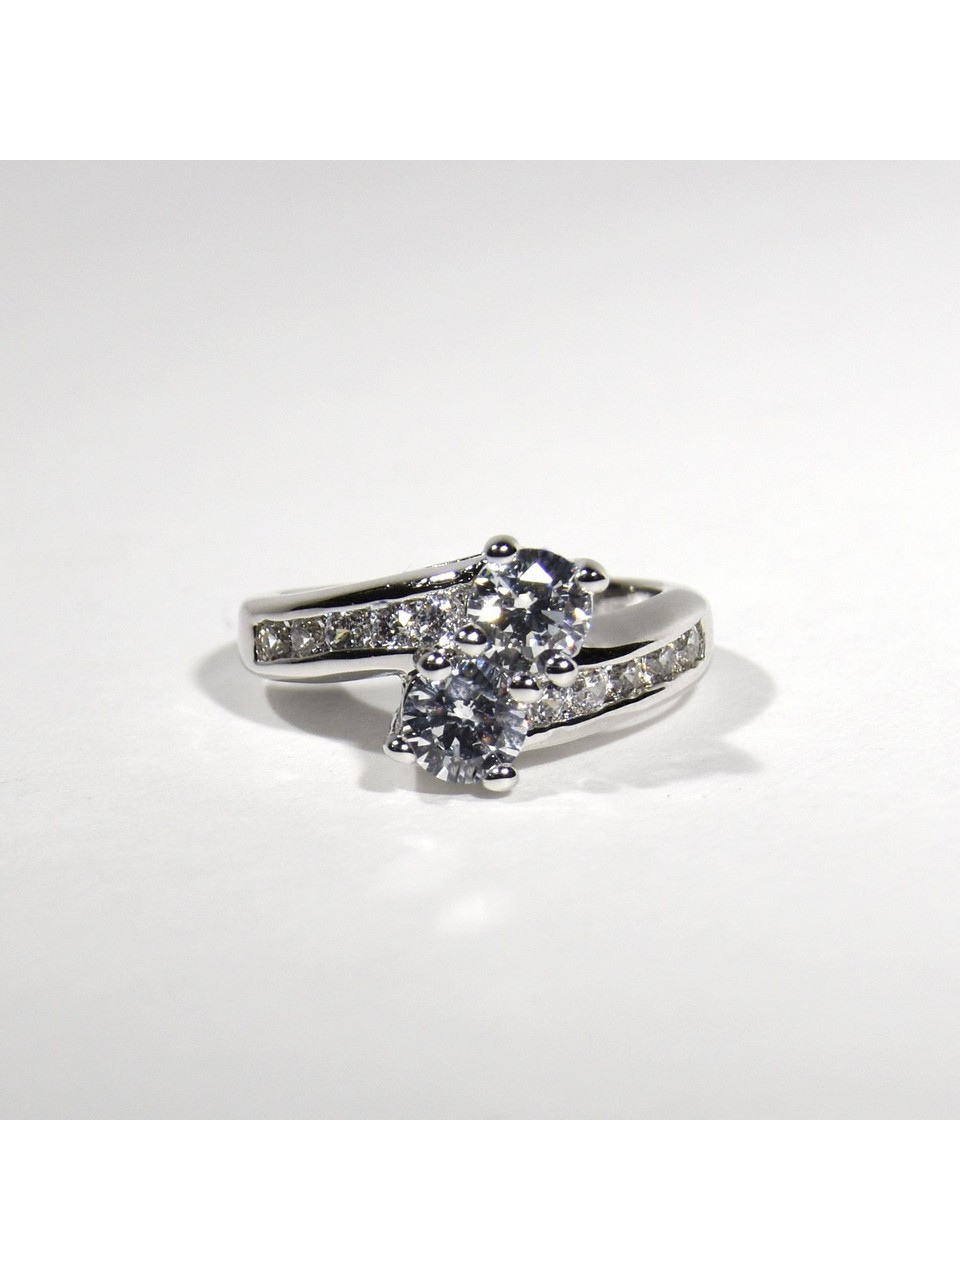 Designer Cubic Zirconia Adjustable Wedding Ring for Ladies | FashionCrab.com